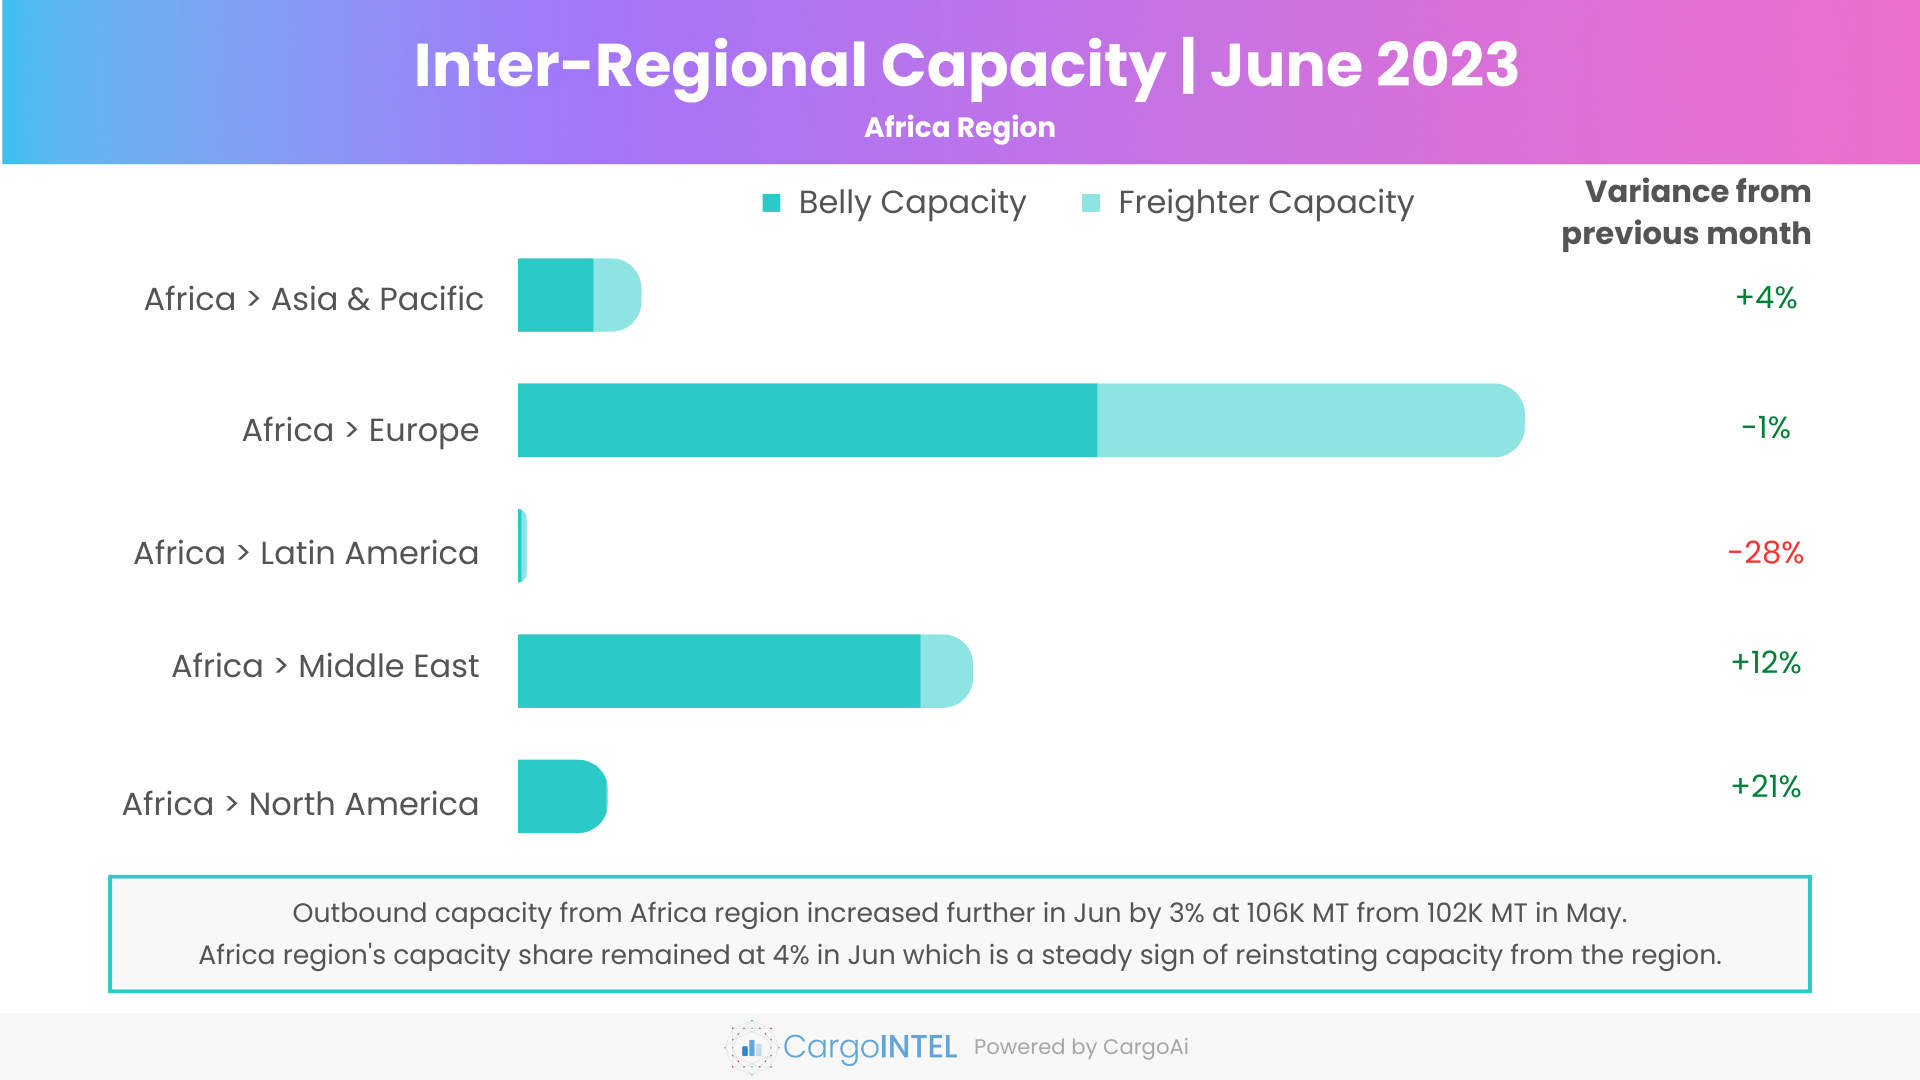 Air cargo capacity of Africa region of Jun 2023